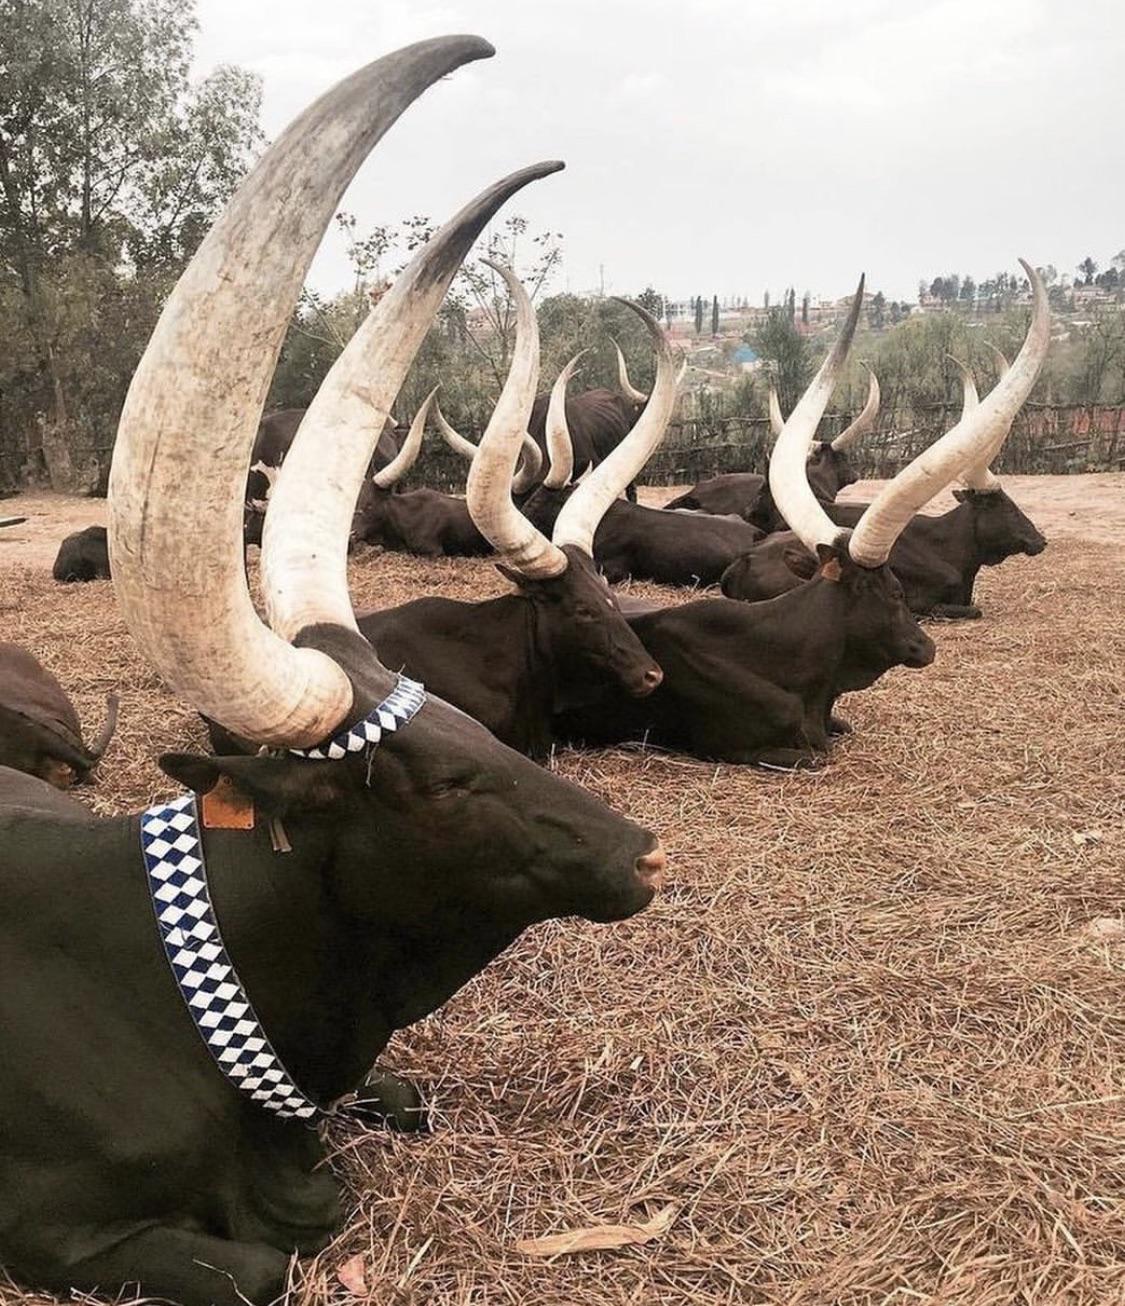 Meet+the+royals+cows+of+Rwanda.